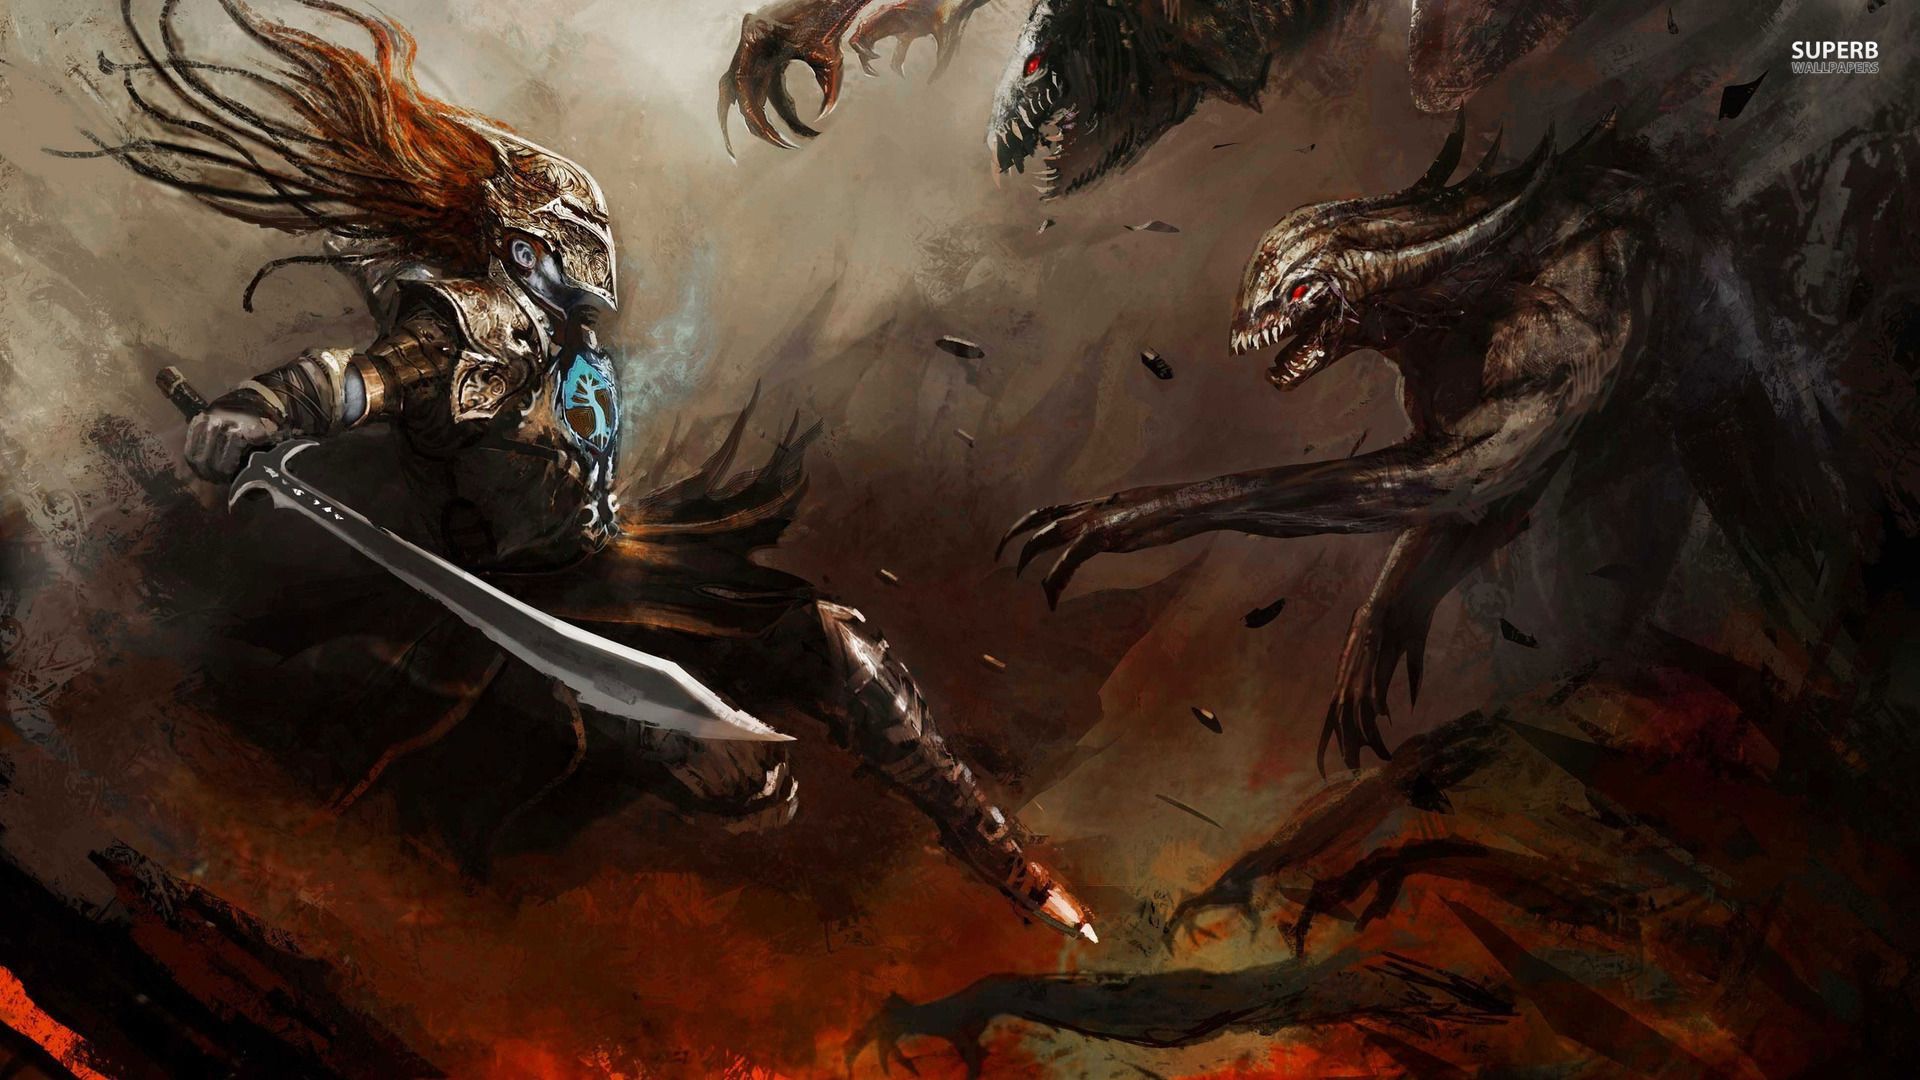 Fighting the dark monsters wallpaper - Fantasy wallpapers -